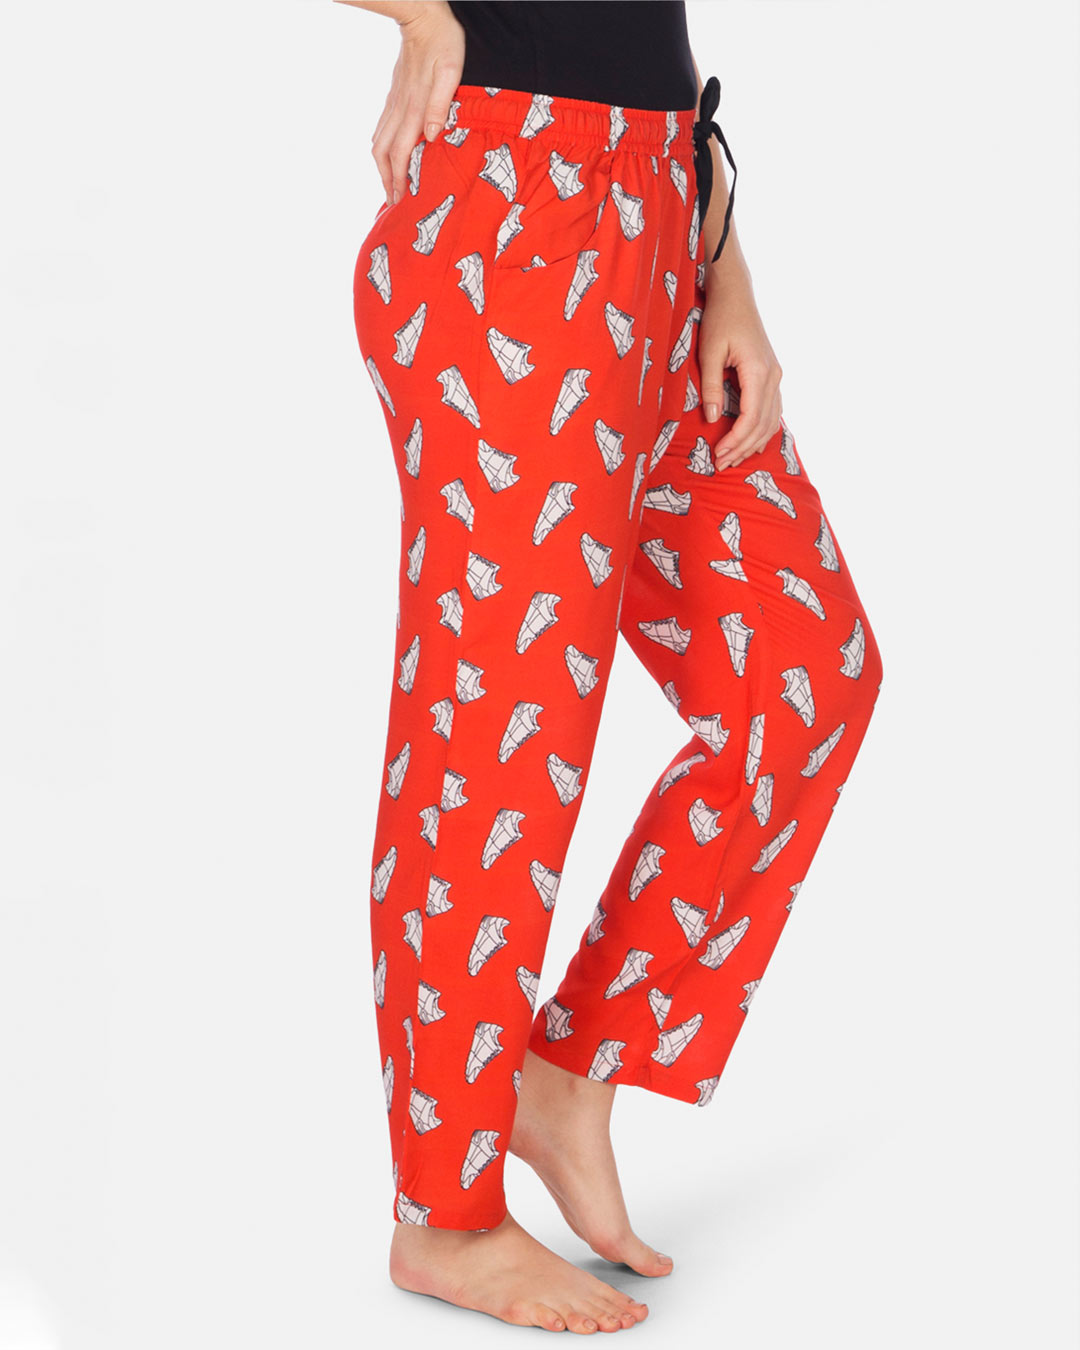 Shop Women's Pyjamas Sneakers Red-Back